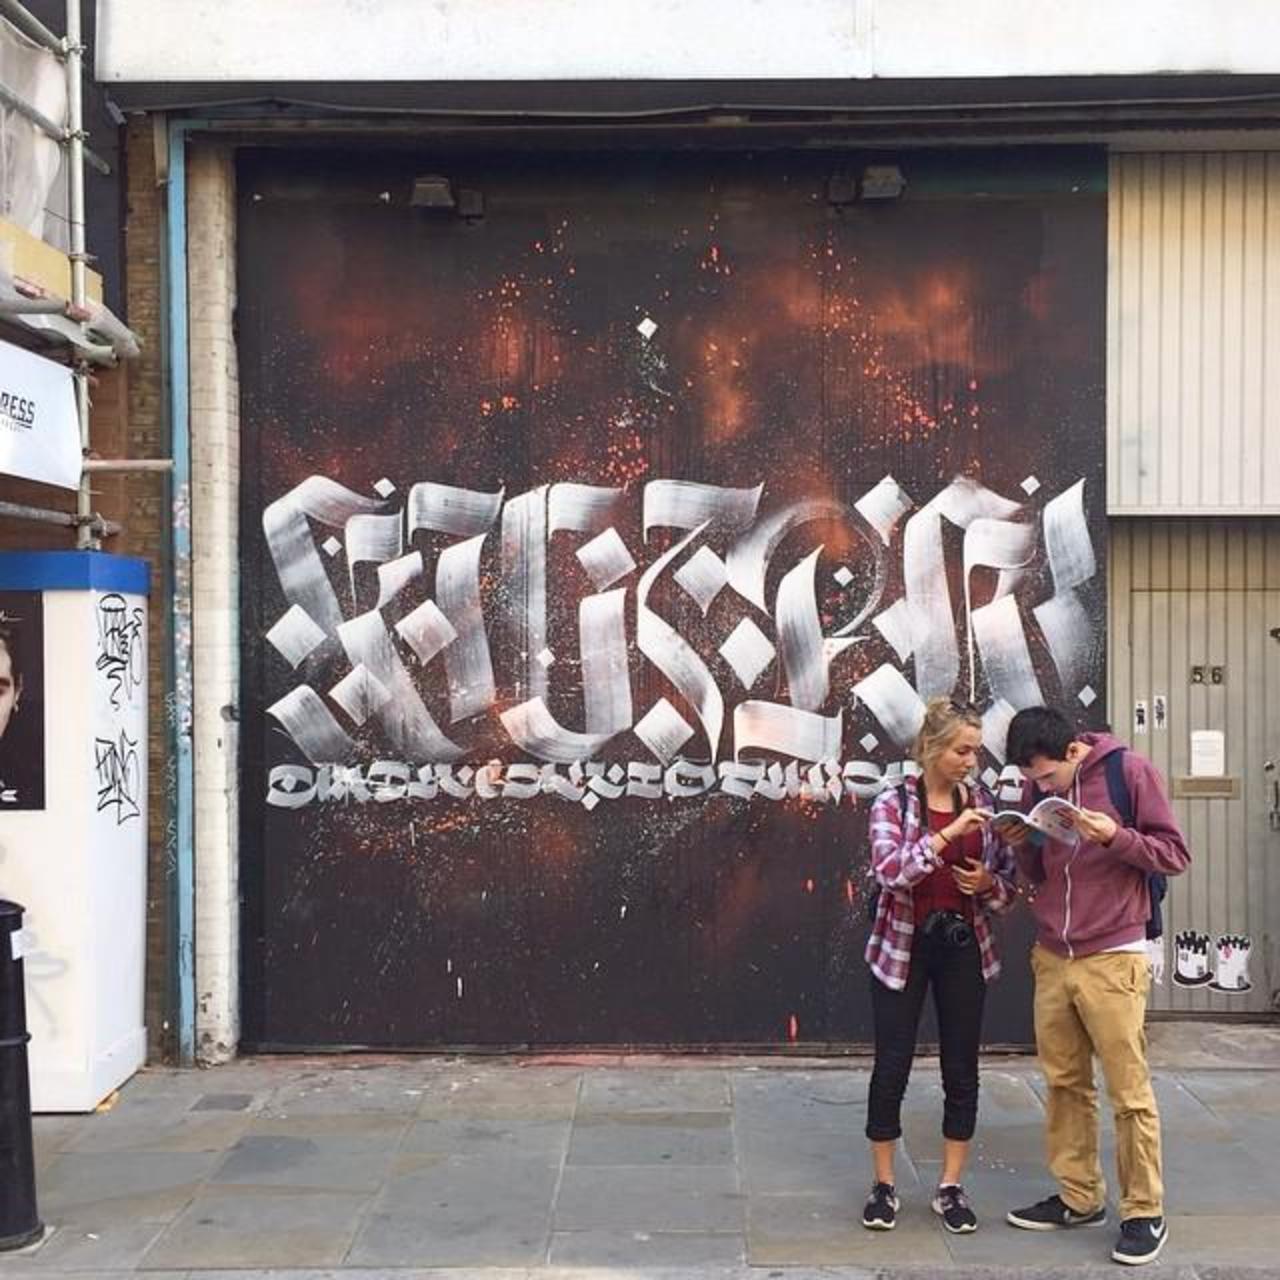 Brilliant piece by @andreariot on Redchurch street #streetart #art #graffiti #andreariot #london #StreetArtIsNotACr… http://t.co/TUKbjEfJNL